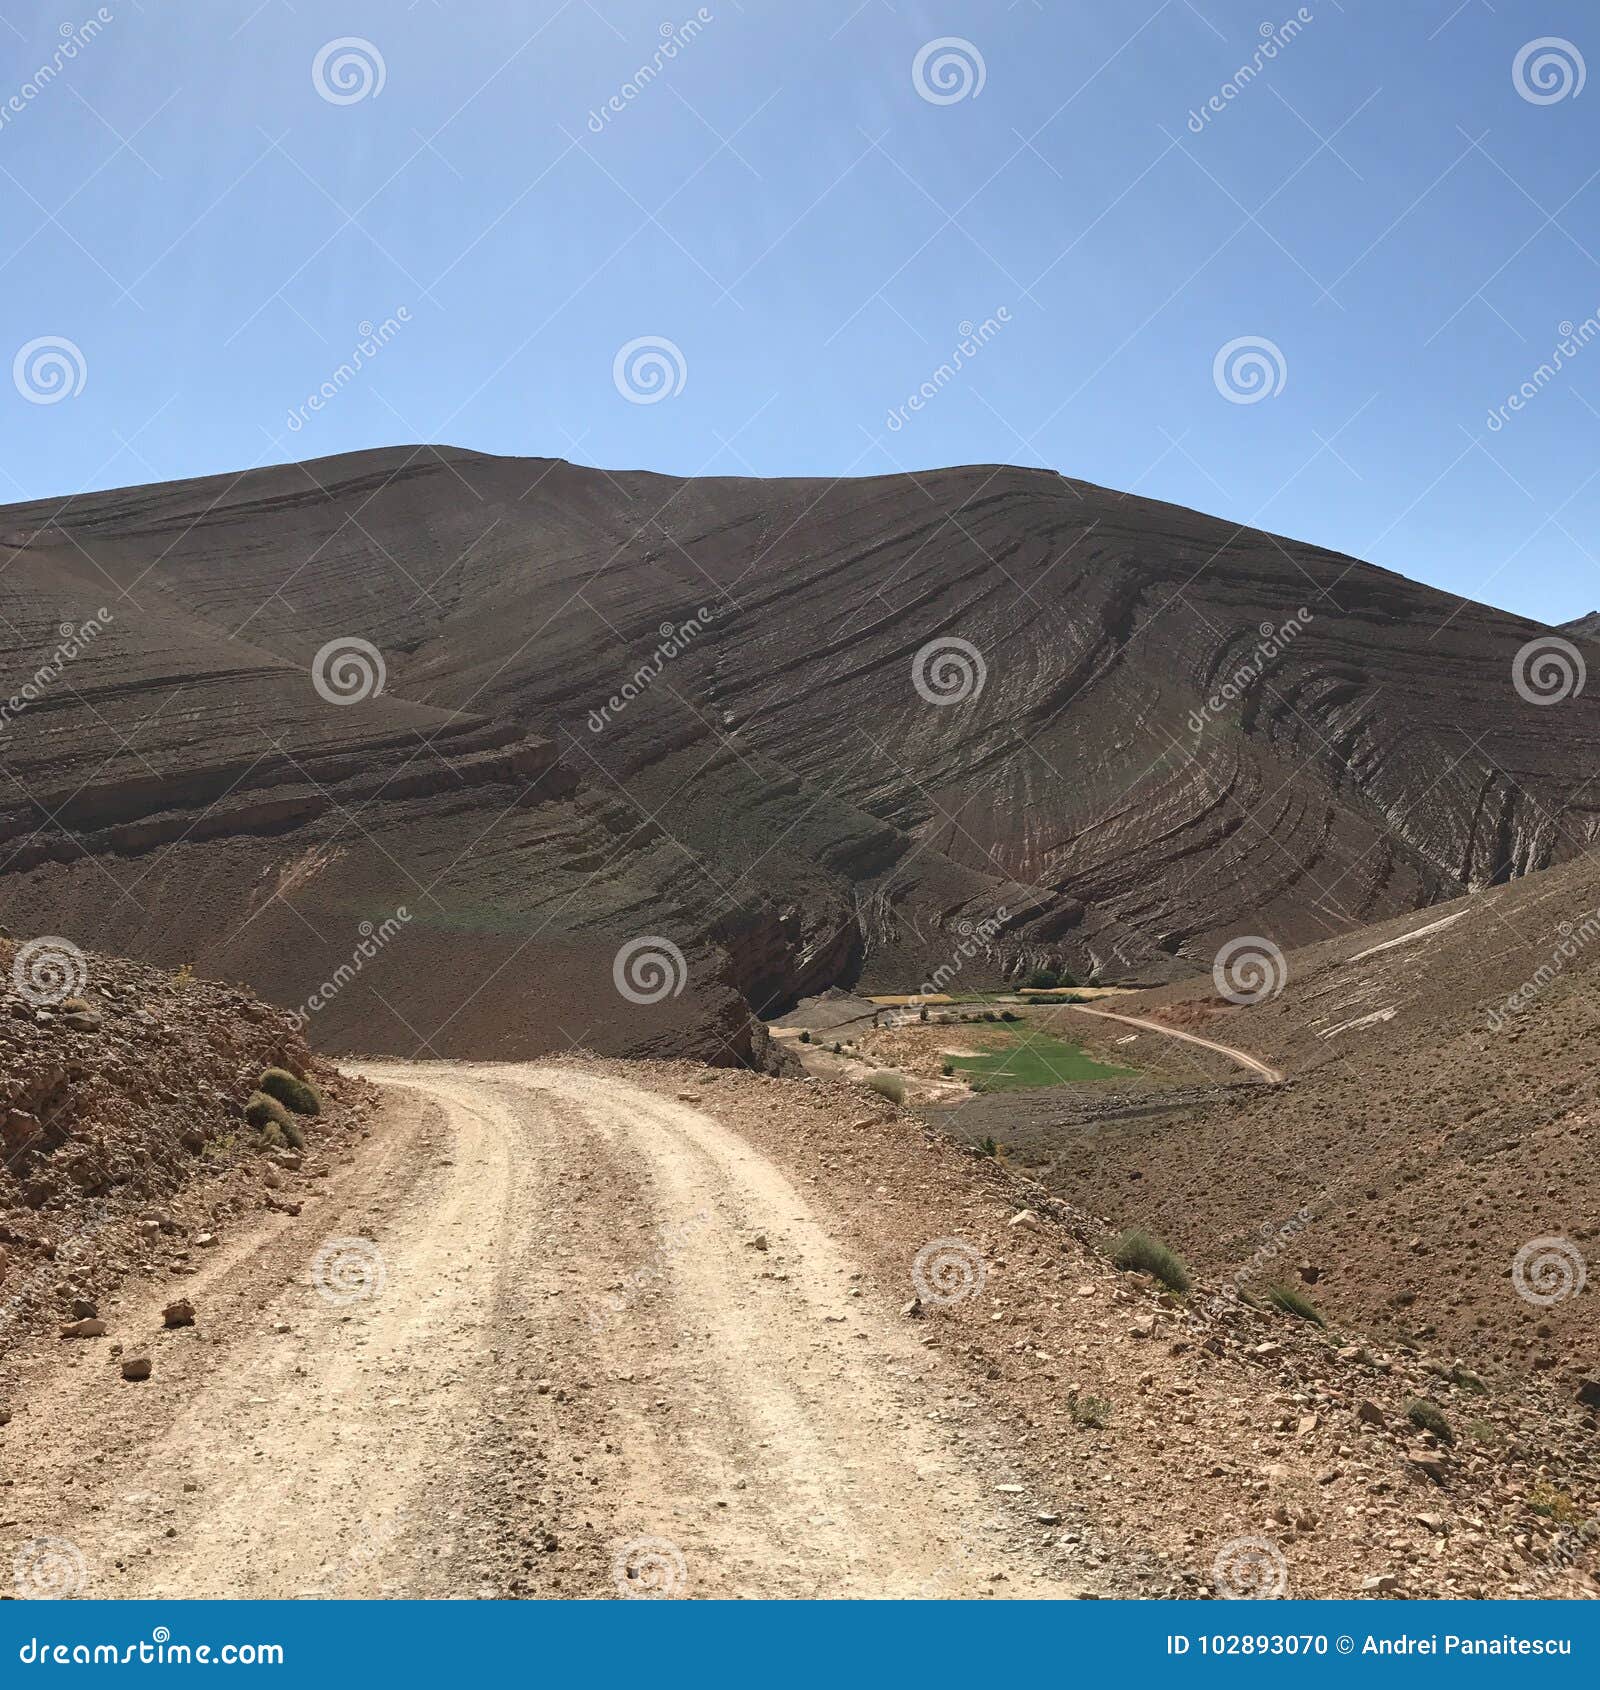 high altitude dirt road